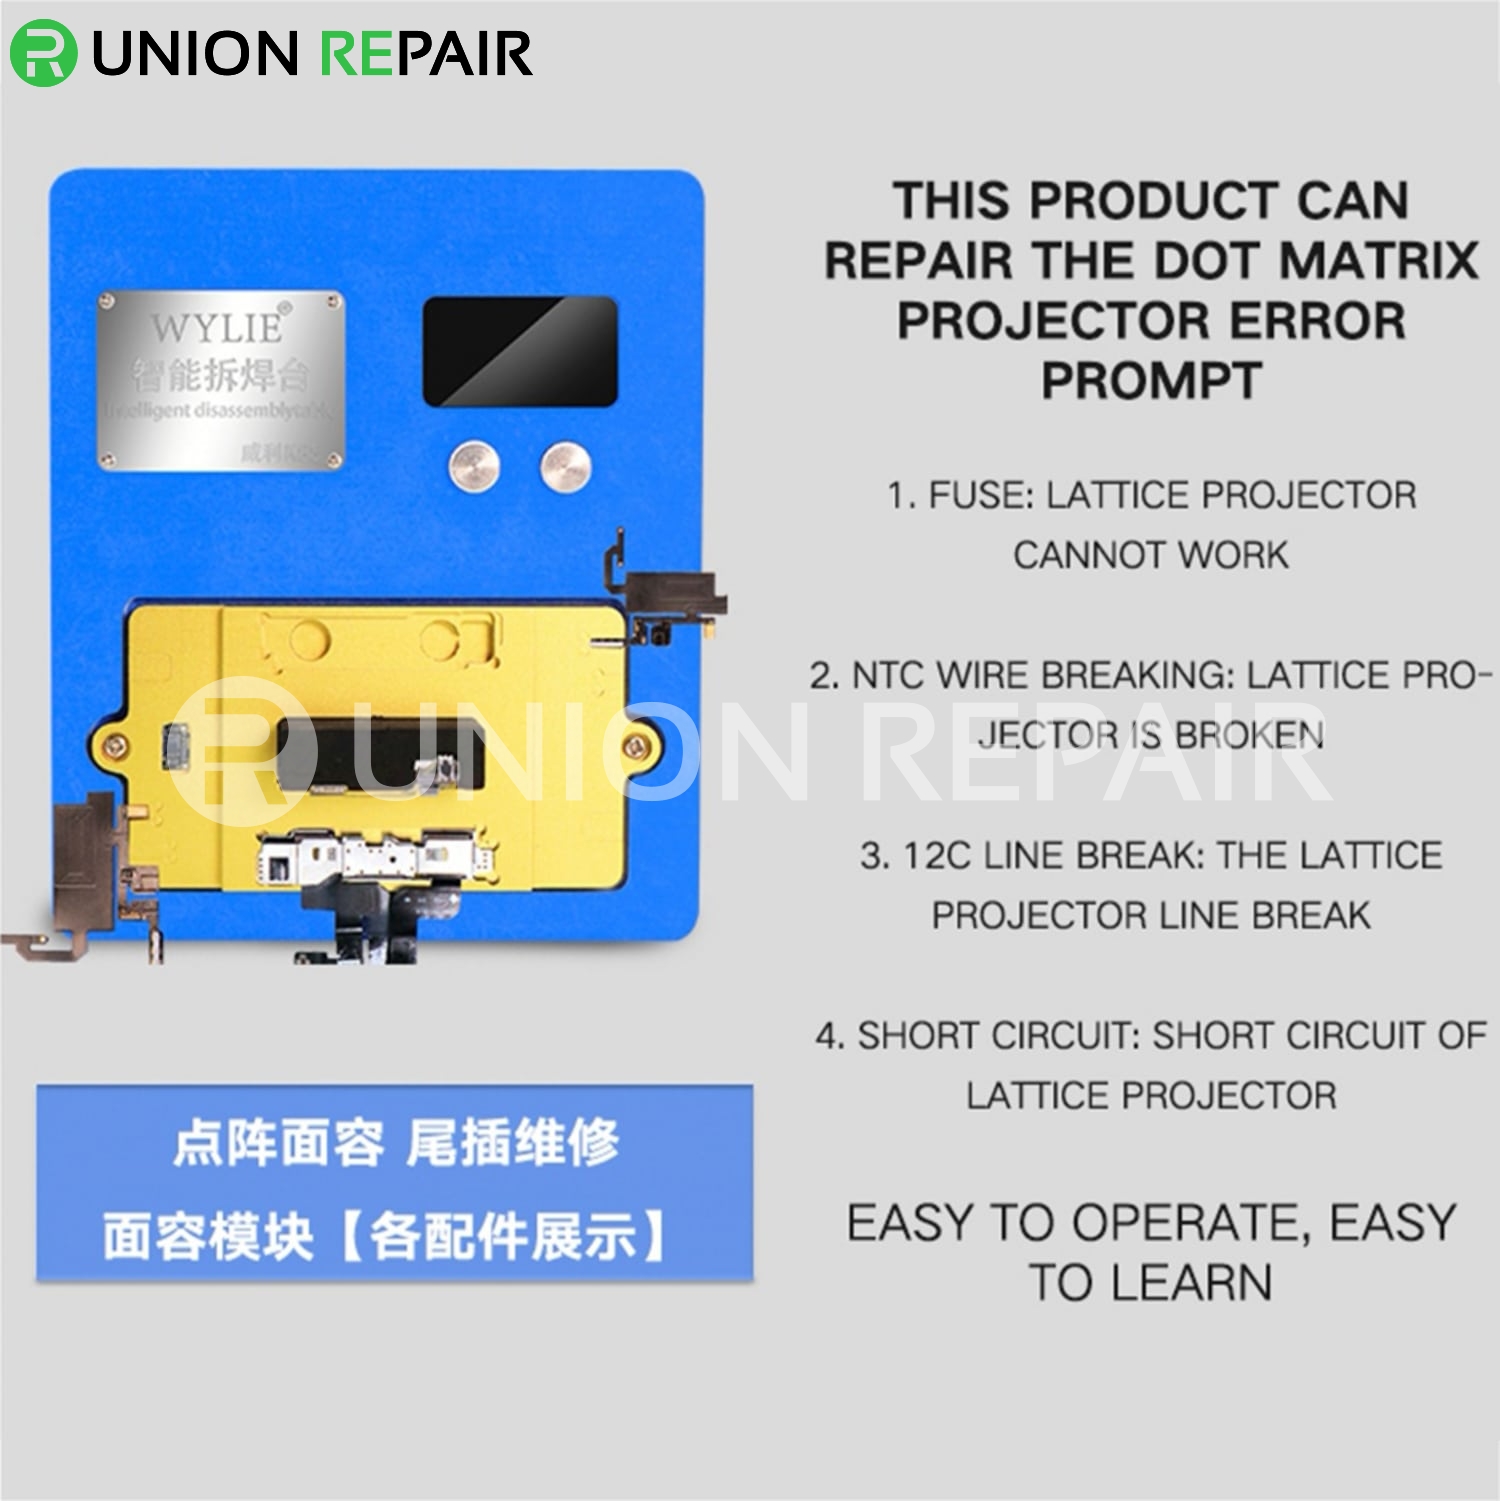 WYLIE K85 Preheating Platform for iPhone Motherboard Face Dot Matrix Repair